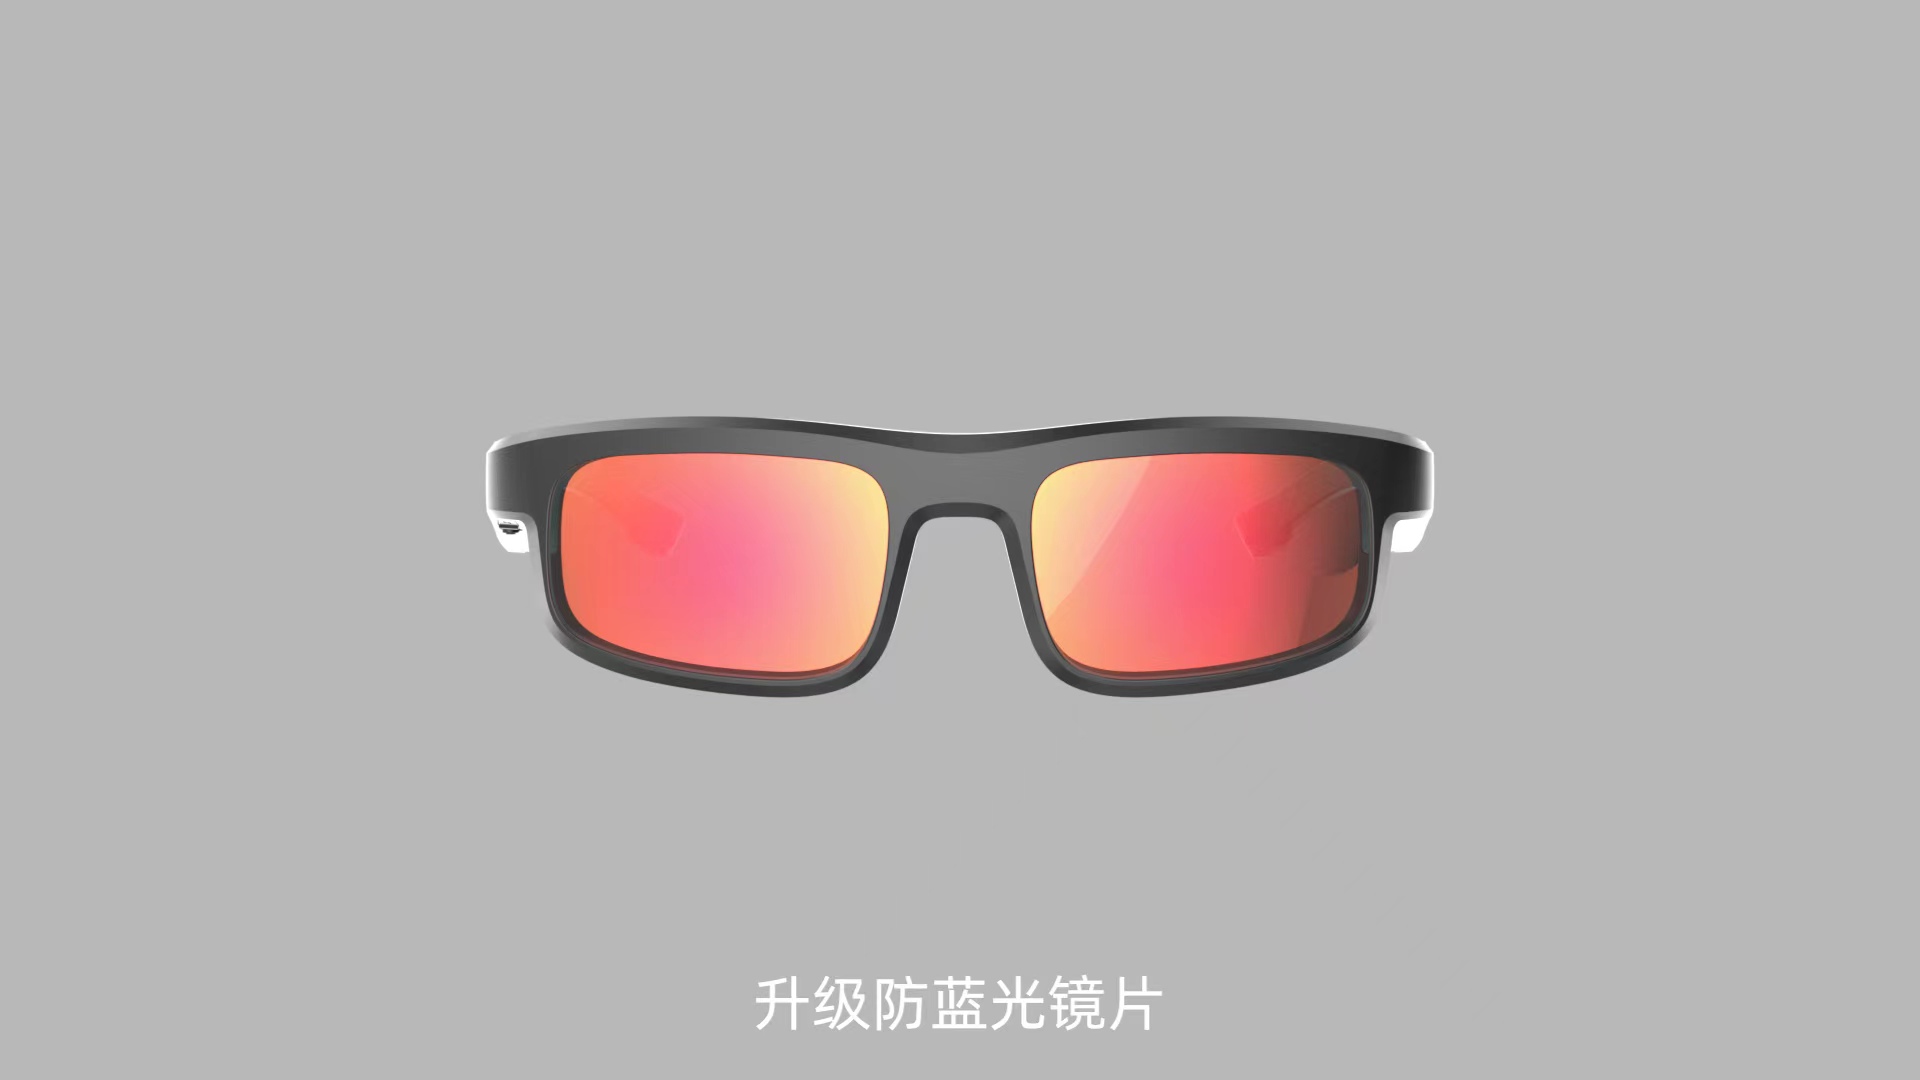 M8 Pro智能蓝牙眼镜 蓝牙耳机眼镜 通话 听歌 墨镜 防紫外线详情图10